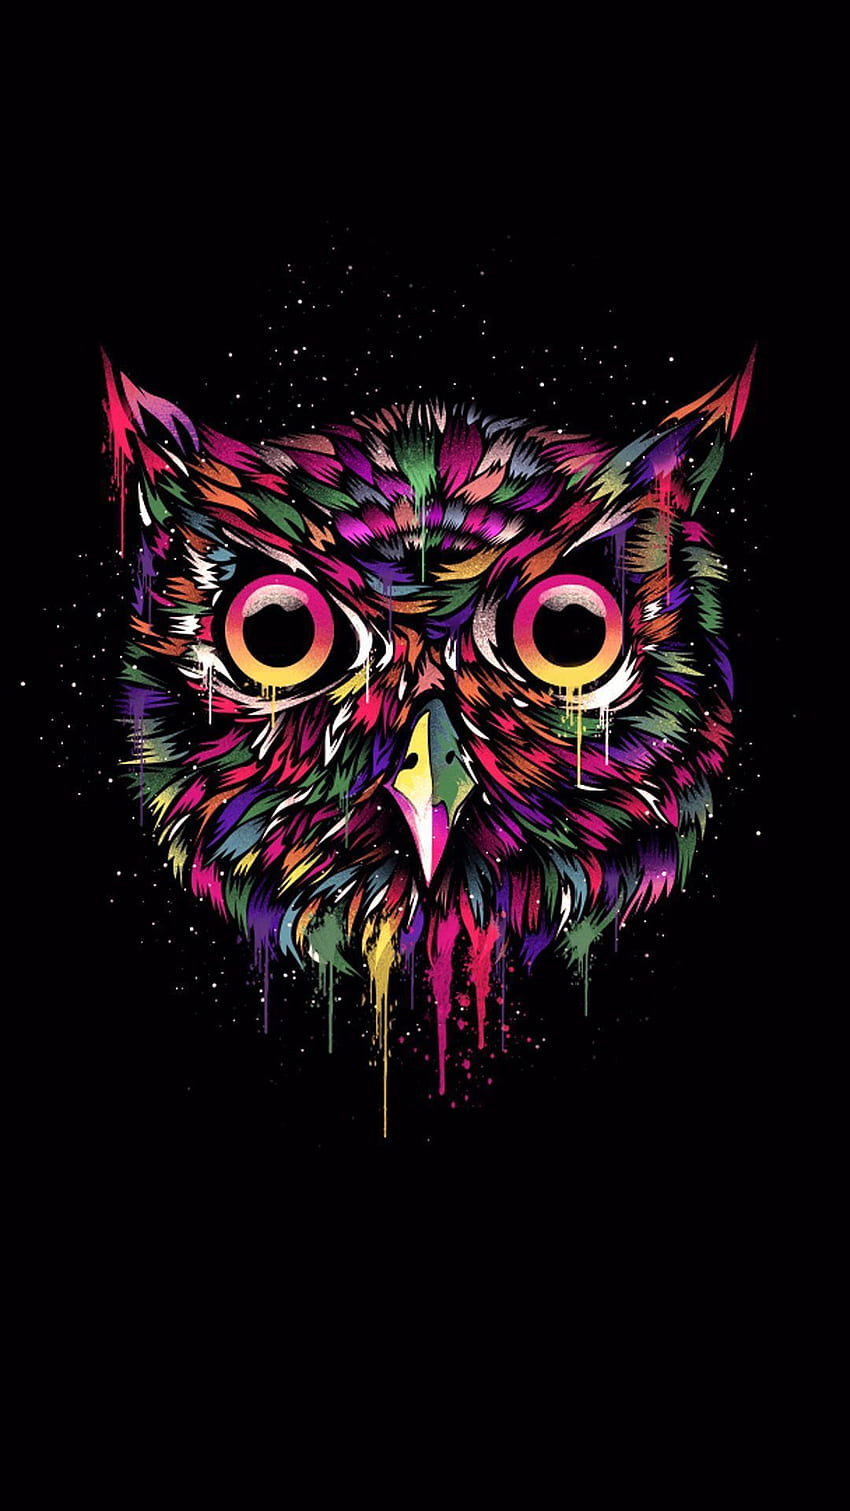 Owl wallpaper Sn0wFl4ke - Illustrations ART street